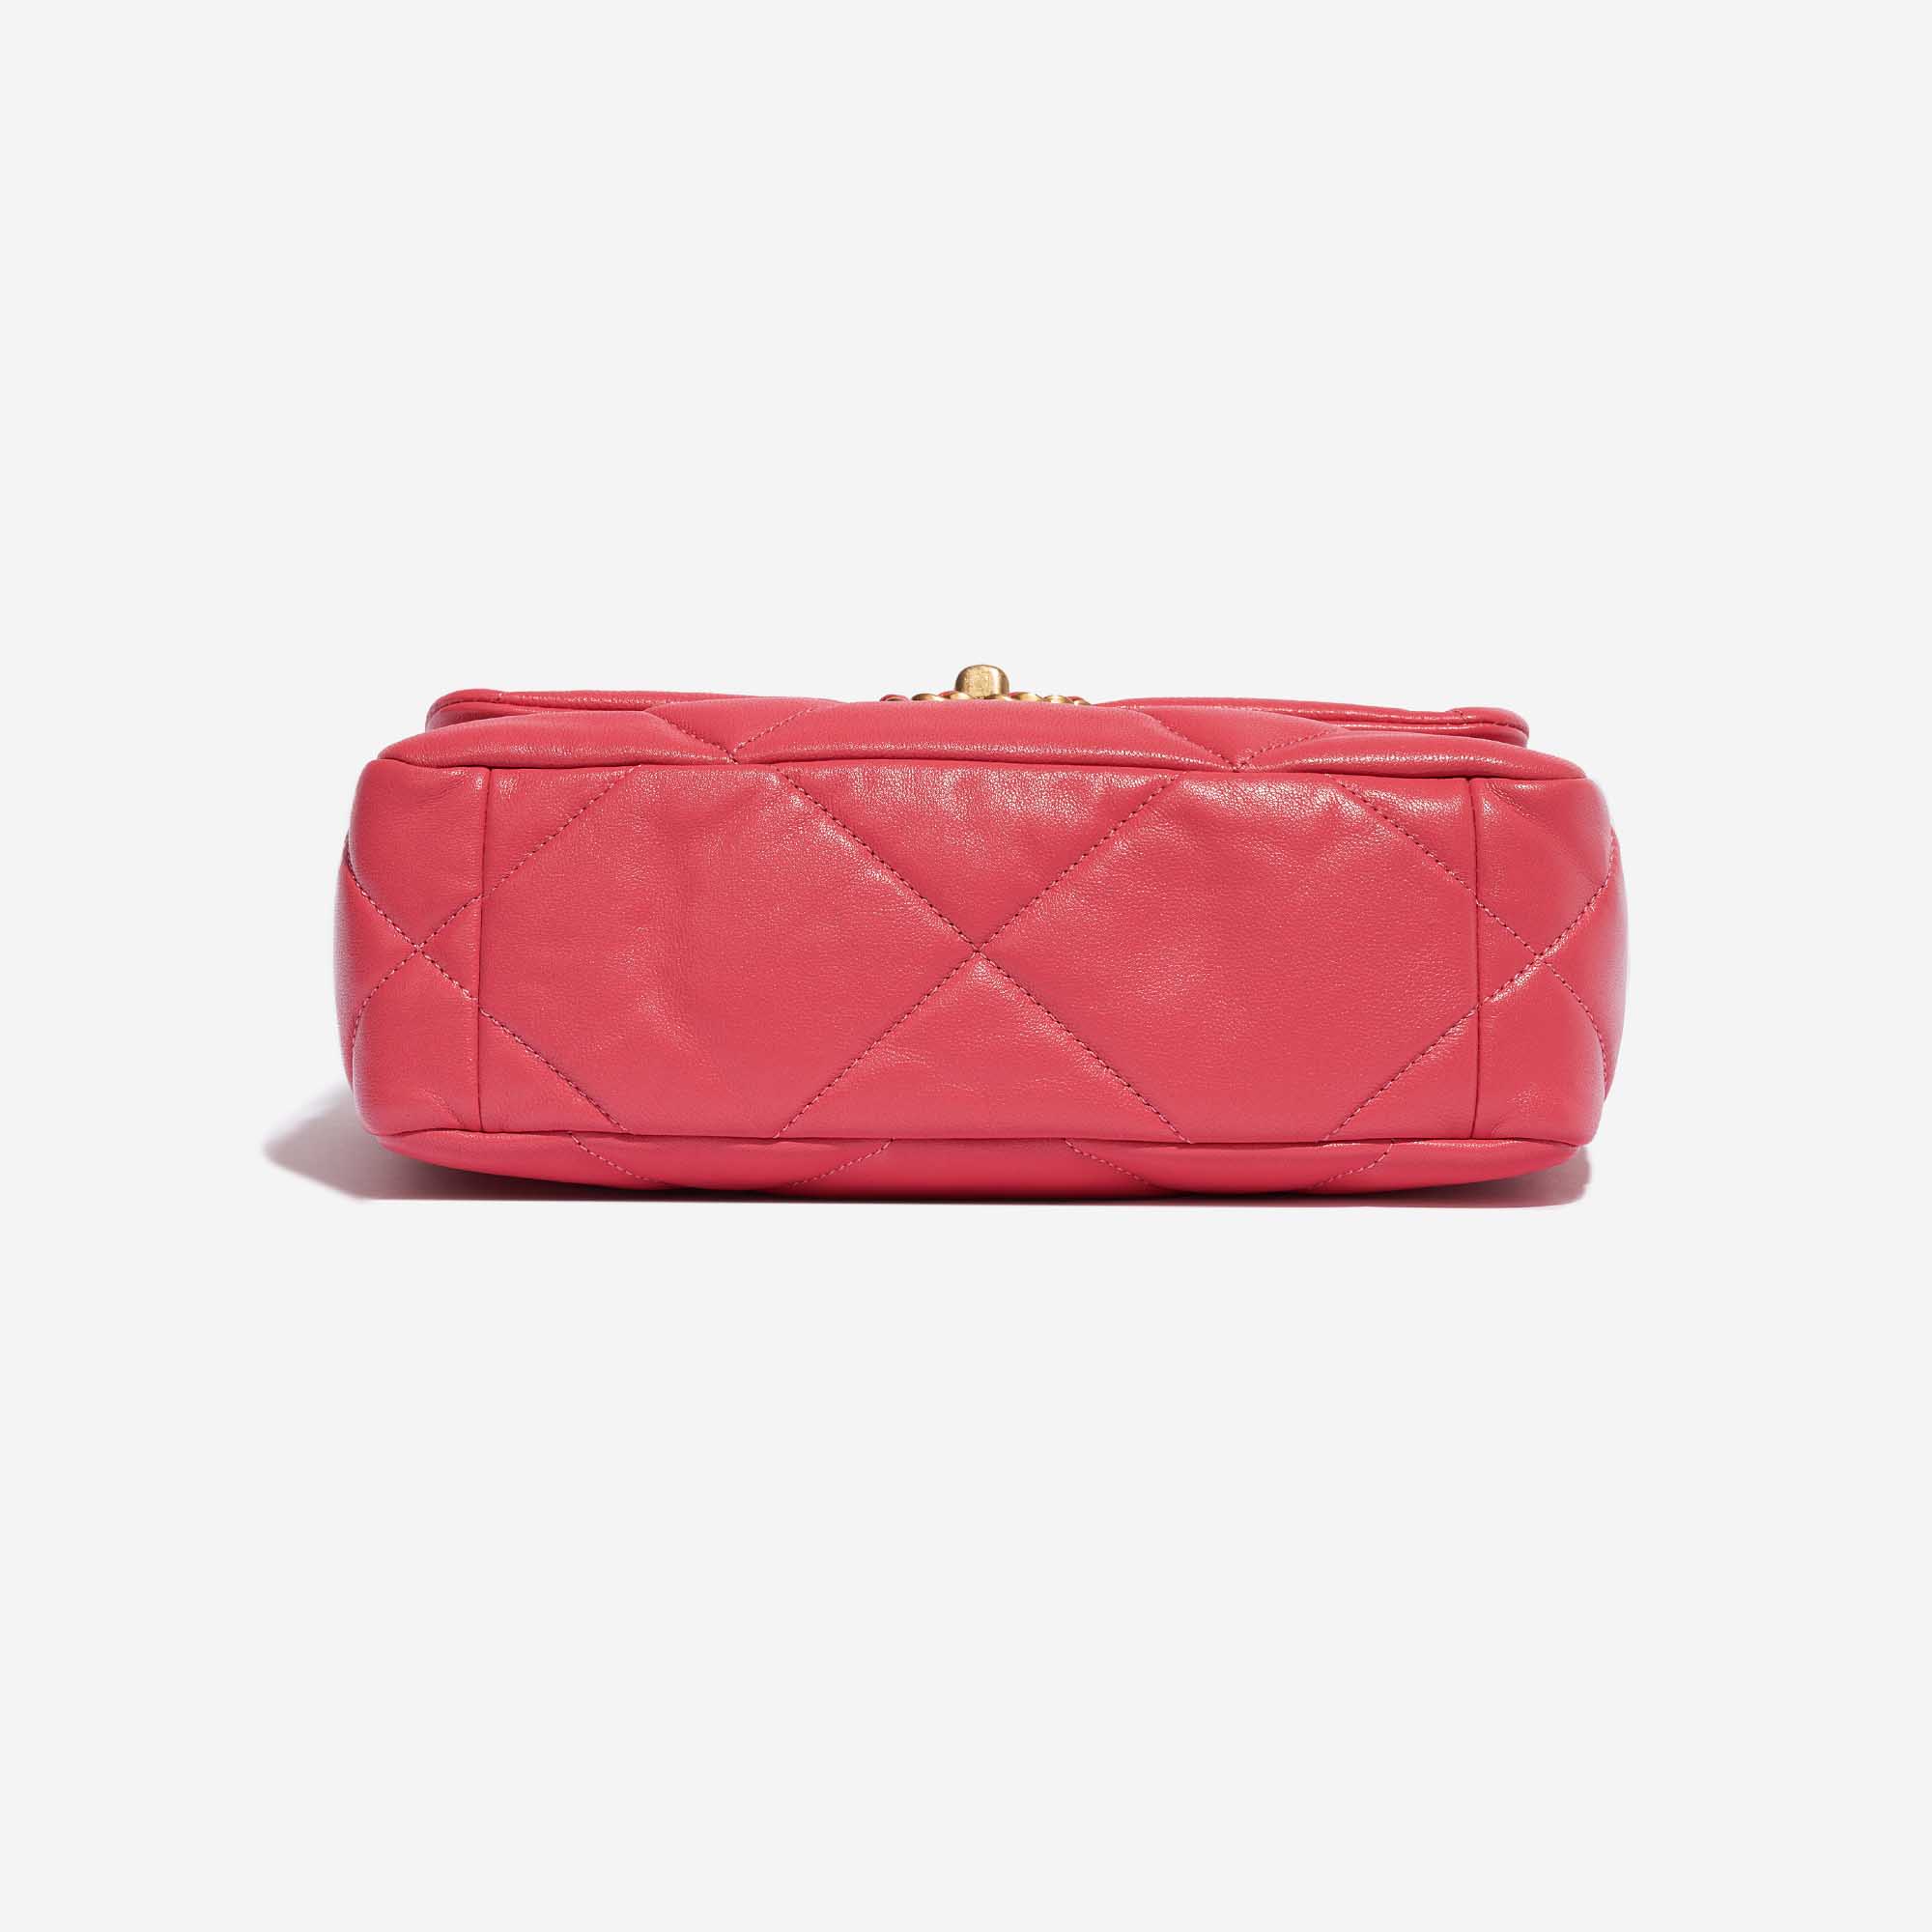 Chanel 19 Flap Bag Pink Lambskin